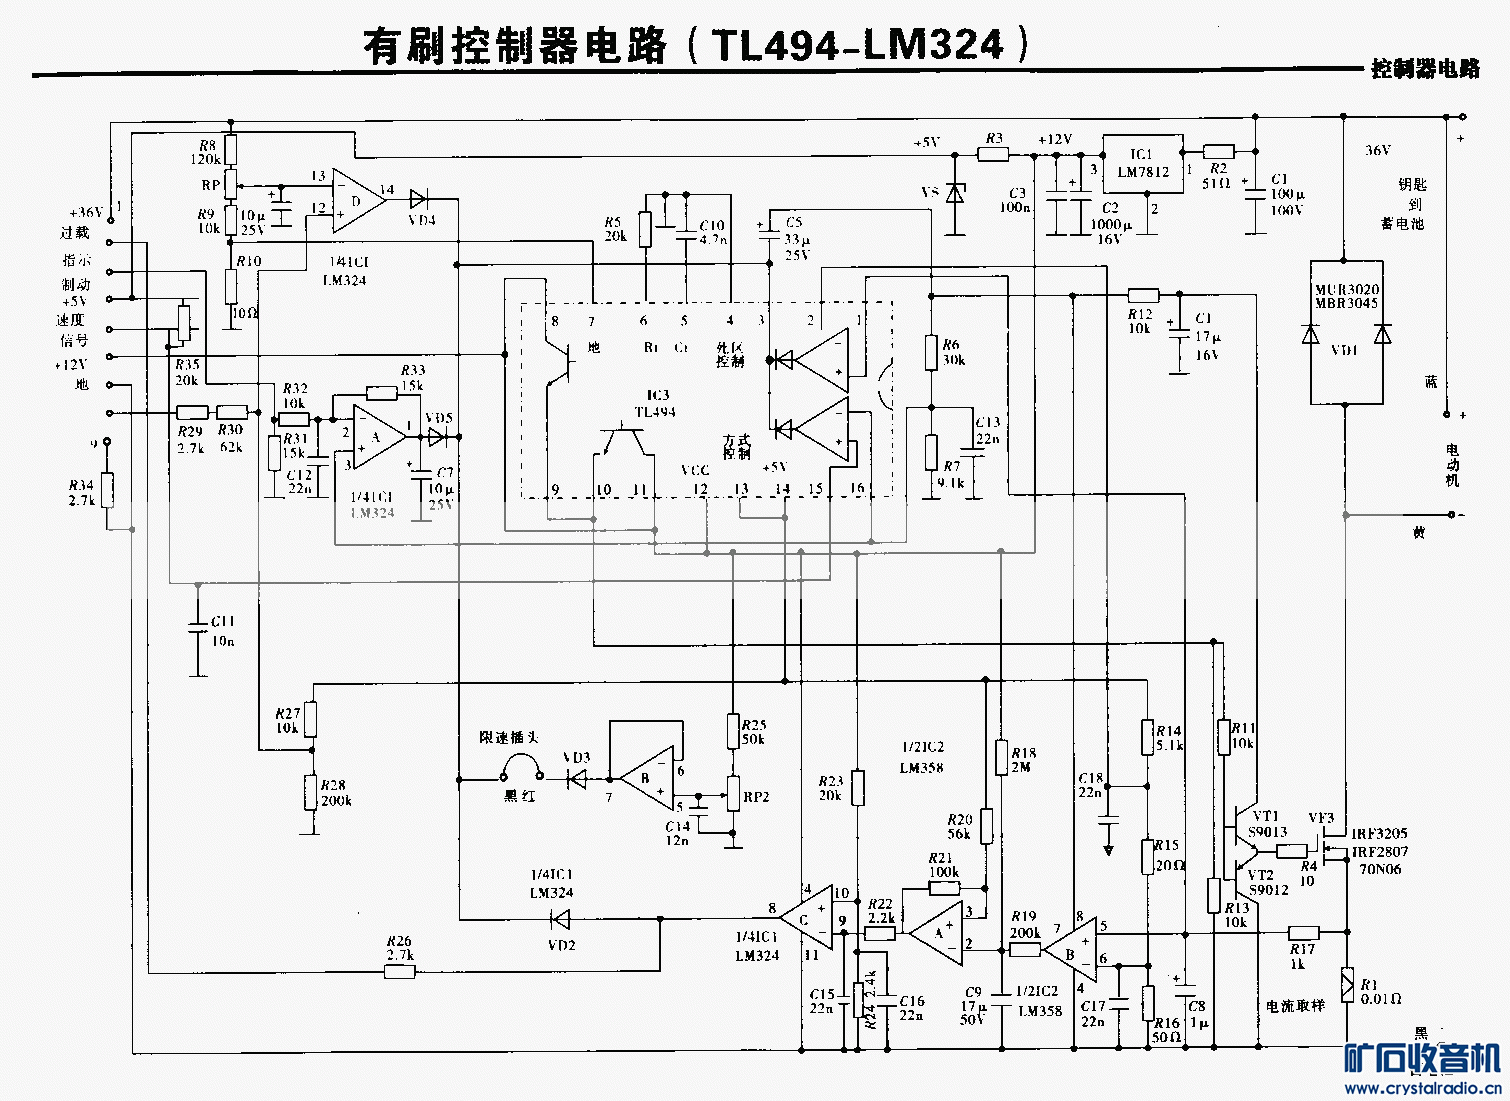 ˢ·(TL494-LM324).gif